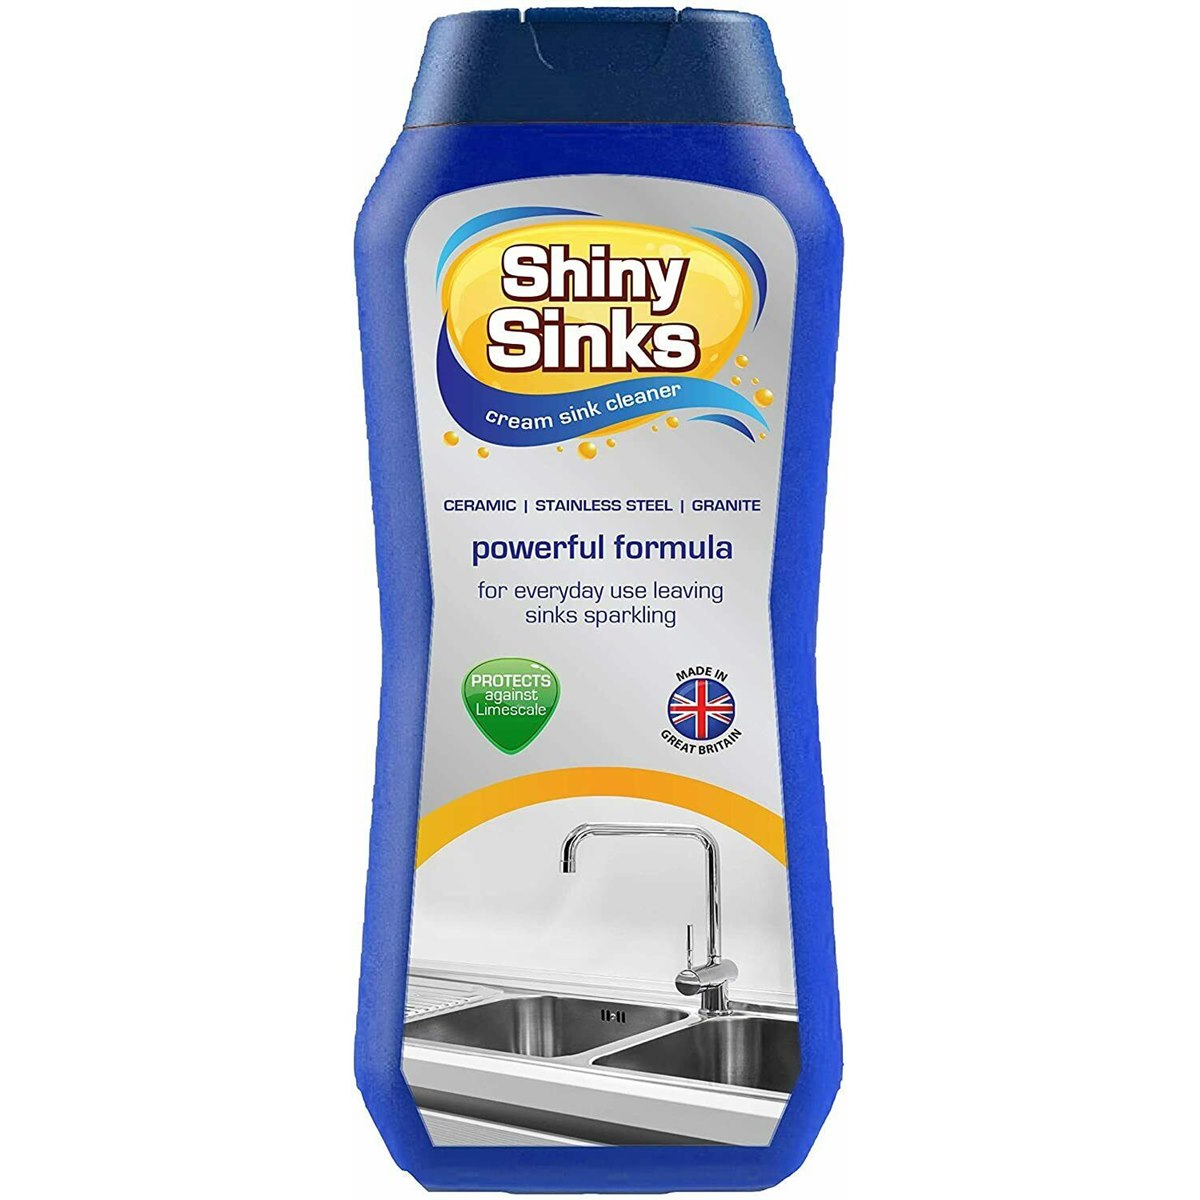 Shiny Sinks Cream Sink Cleaner 290ml